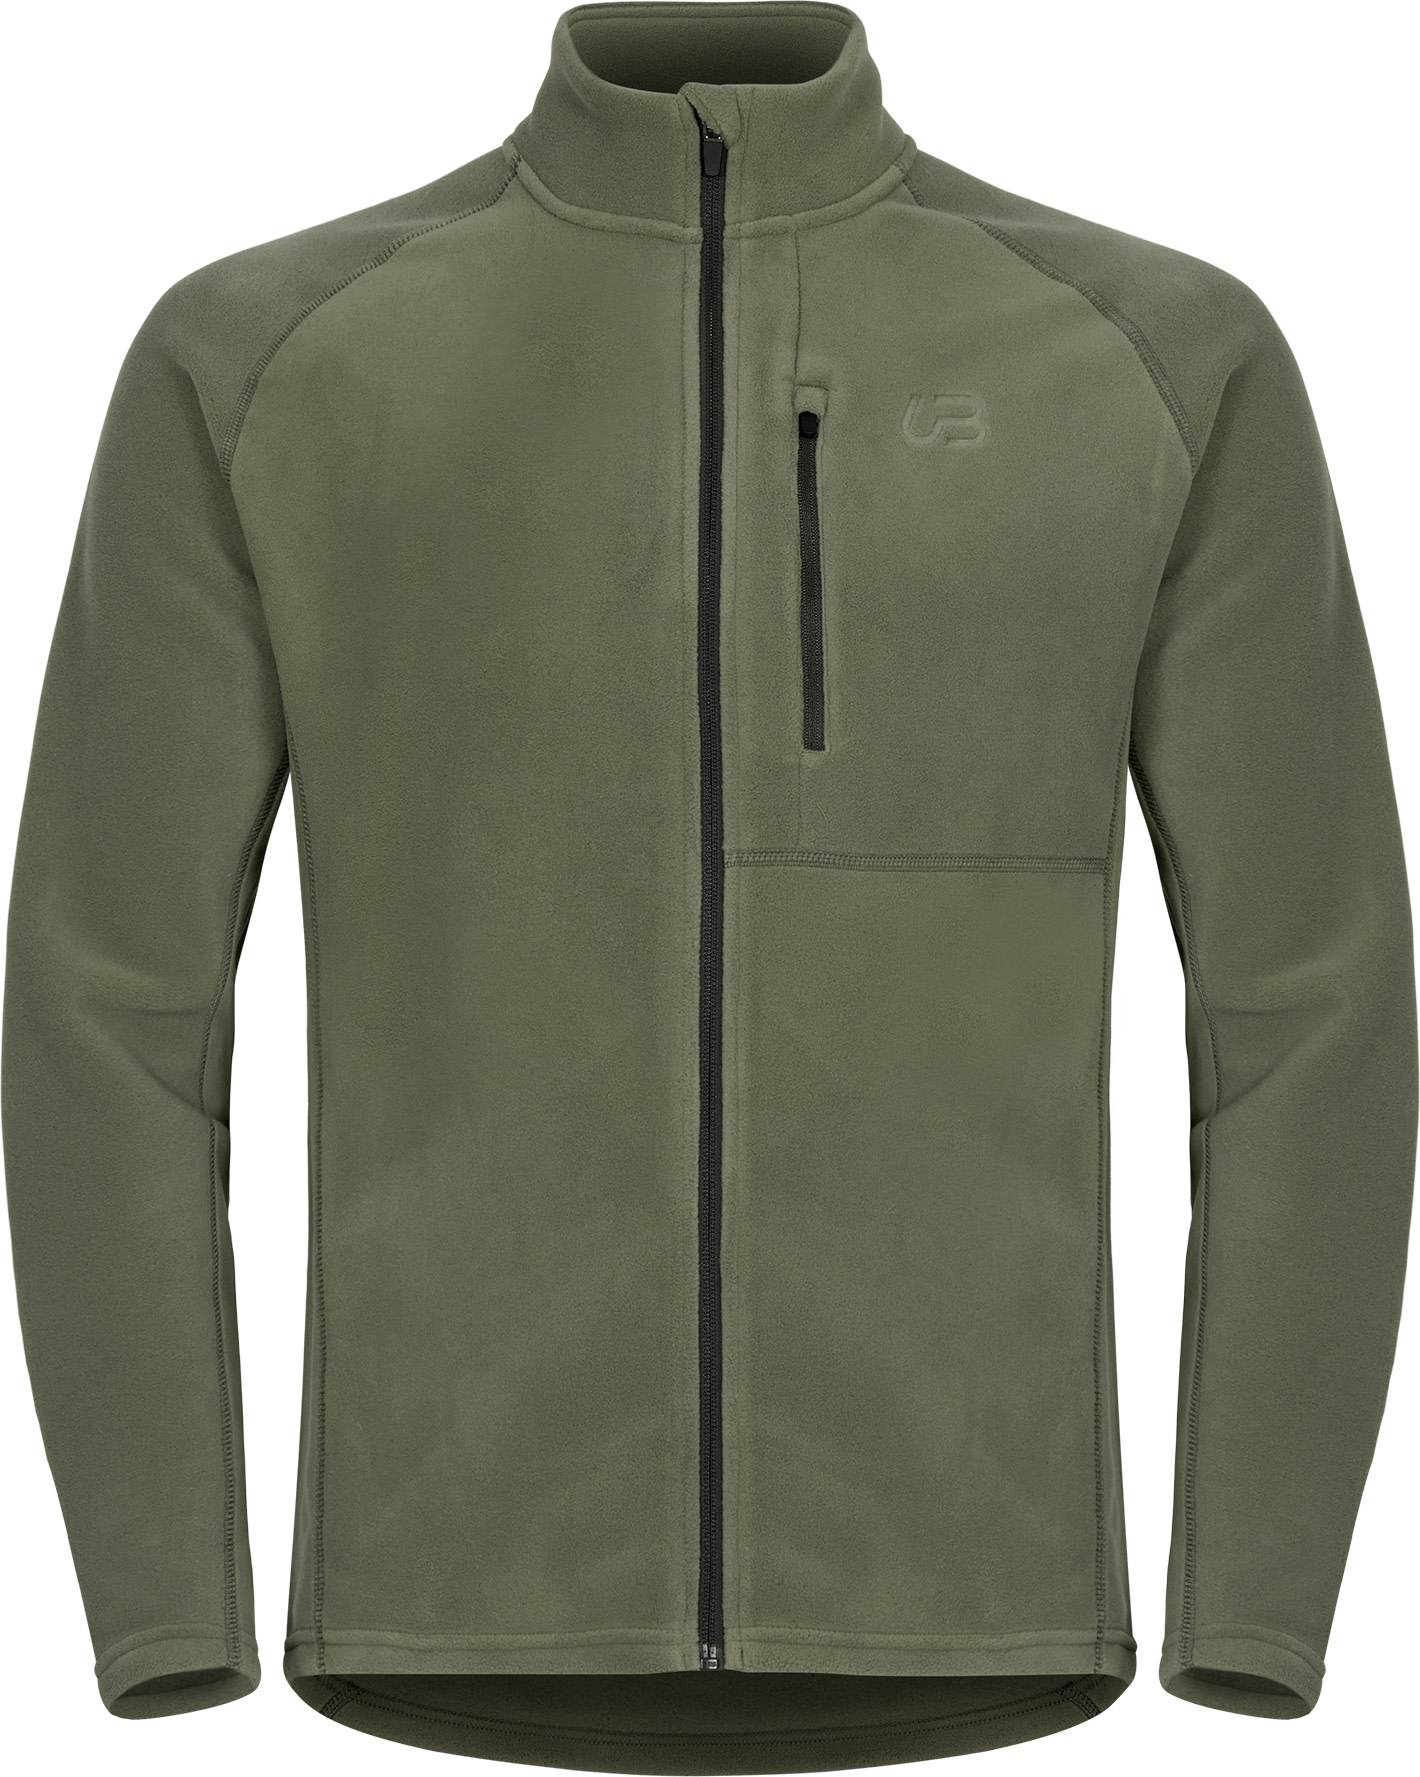 Men's Tyldal Fleece Jacket DeepLichengreen